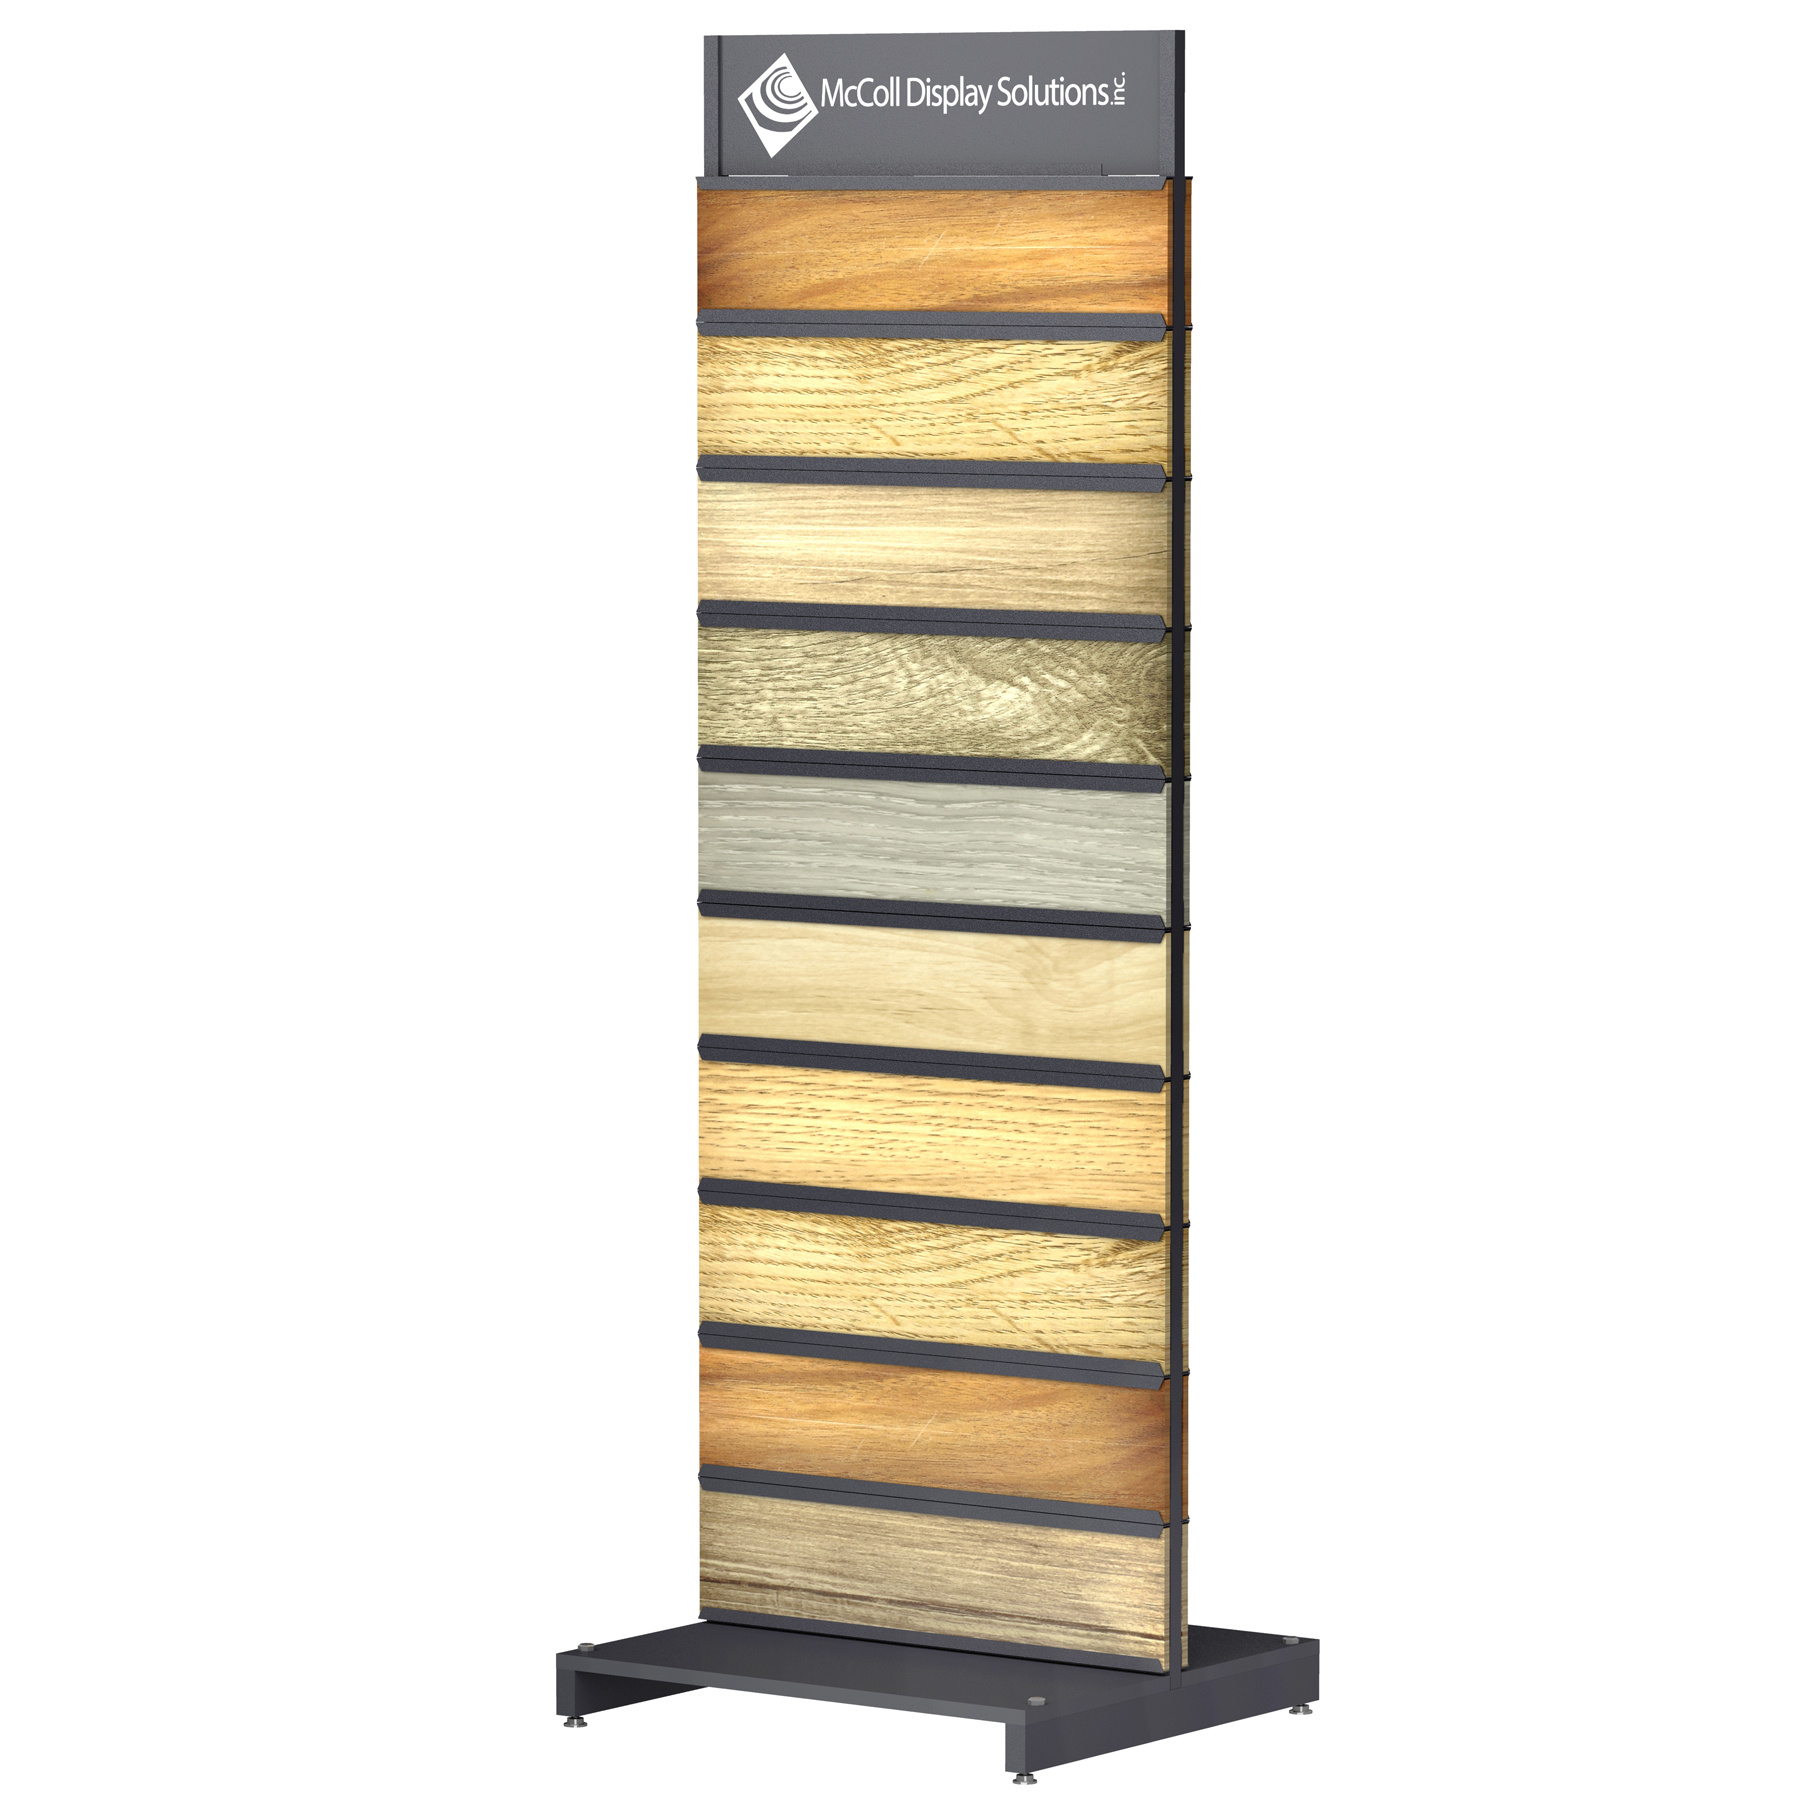 CD67 Standing Rack Channel System Tower Hardwood Wood Plank Laminate Showroom Displays McColl Display